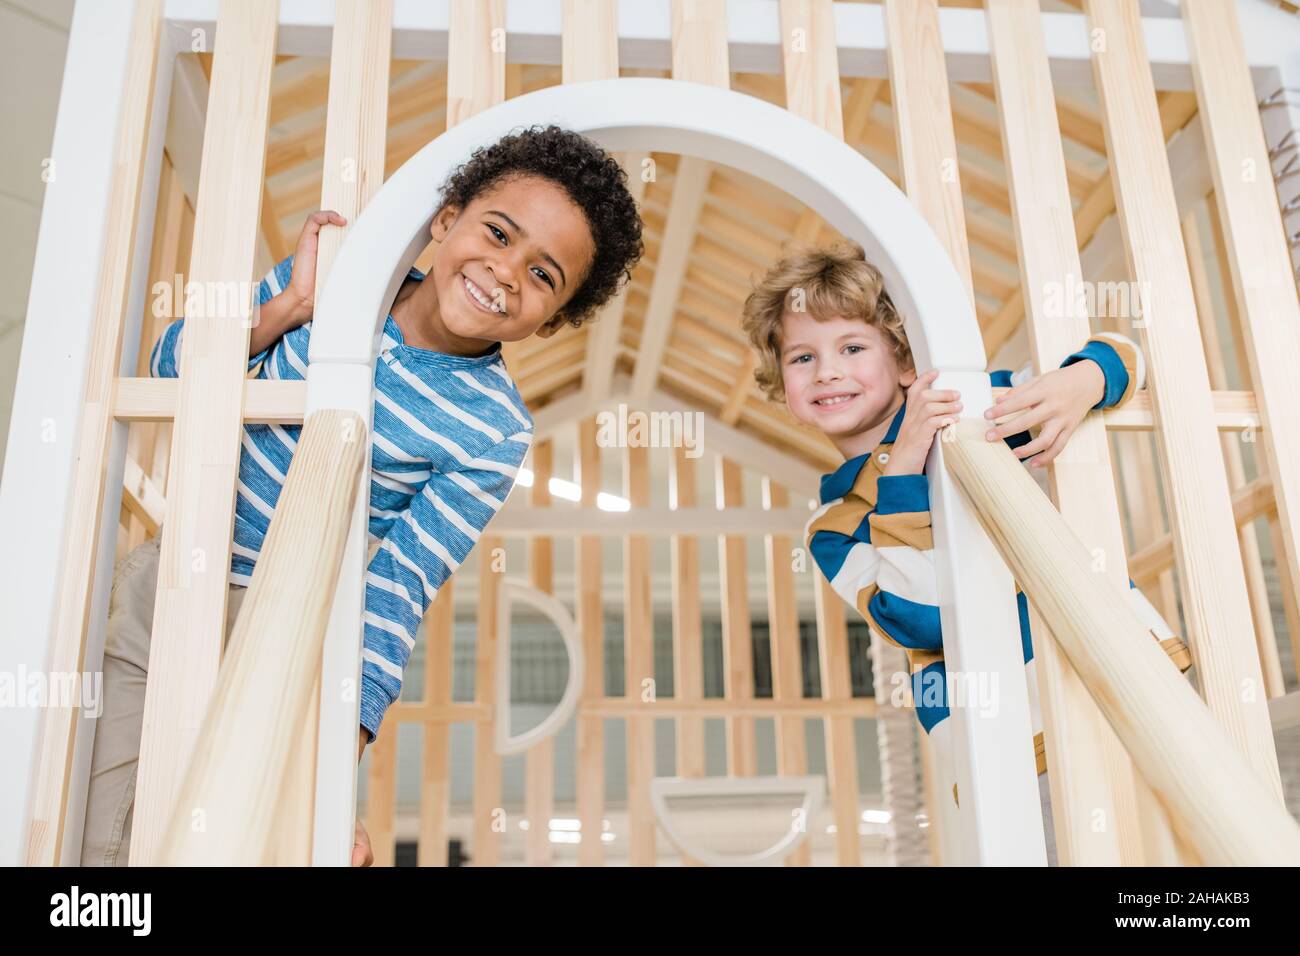 Cute cheerful preschoolers having fun on playground at children center Stock Photo